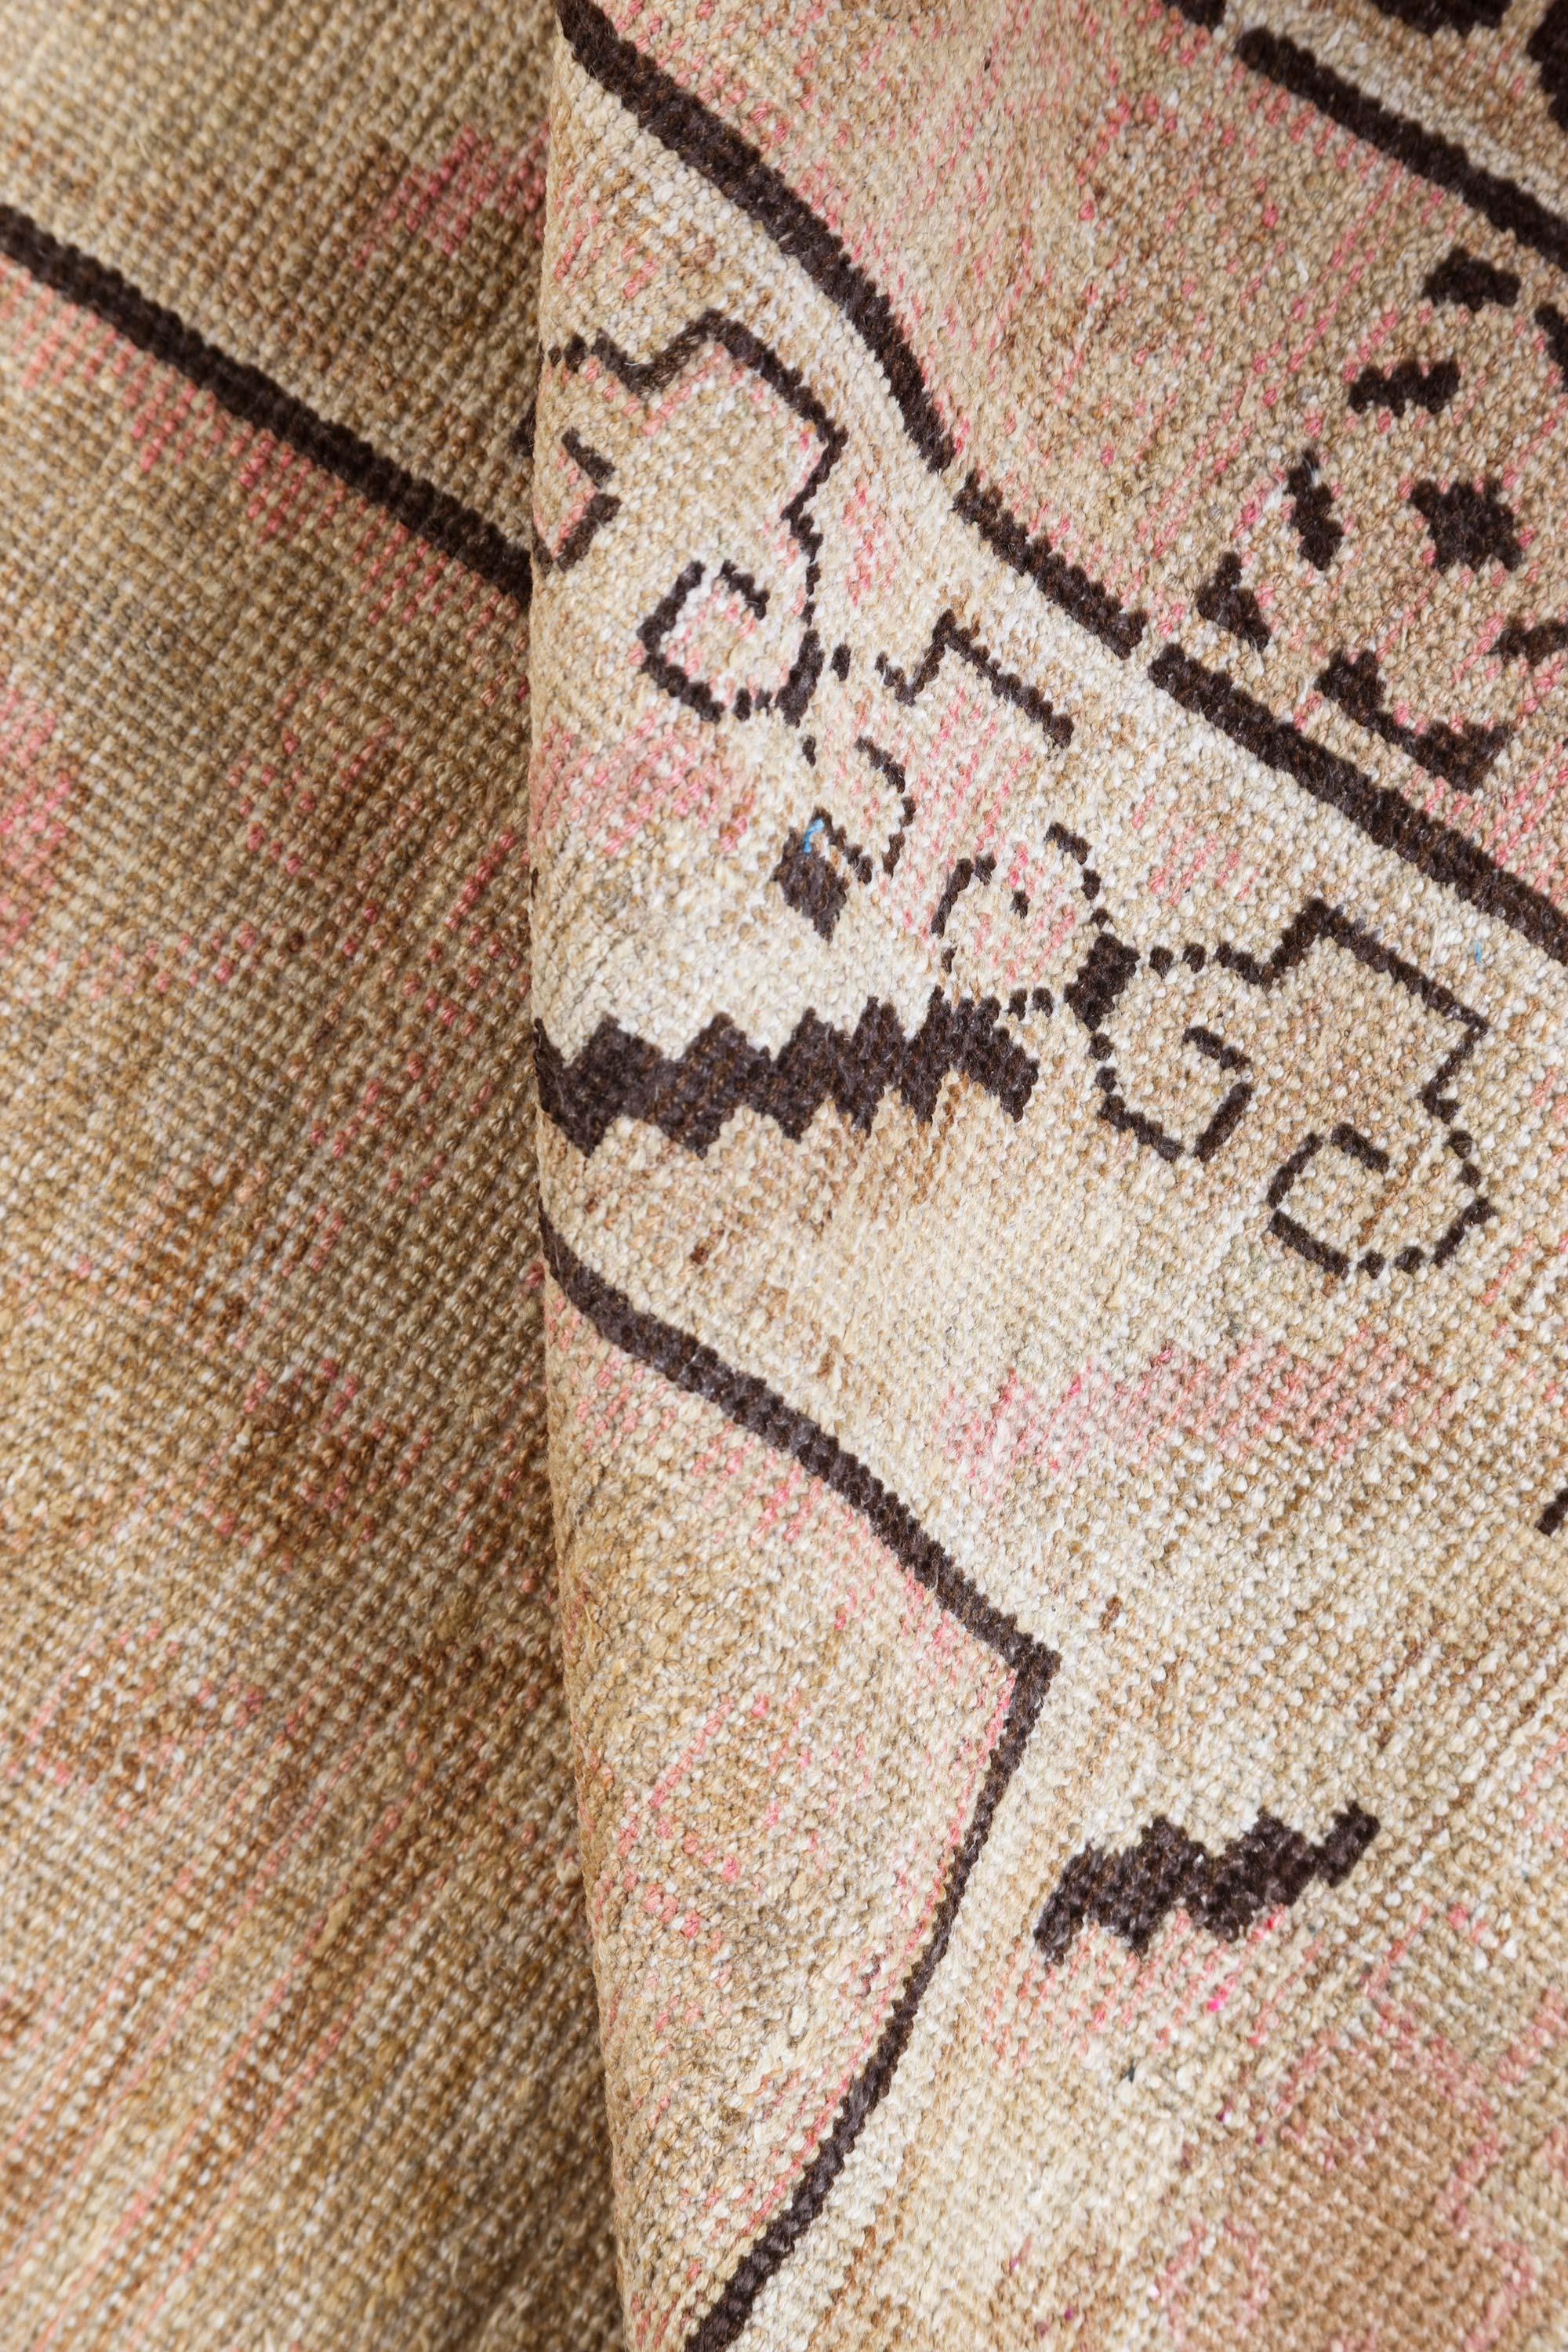 Vintage Samarkand 'Khotan' Pale Dusty Pink, Beige, Brown Handmade Wool Rug
Size: 5'2